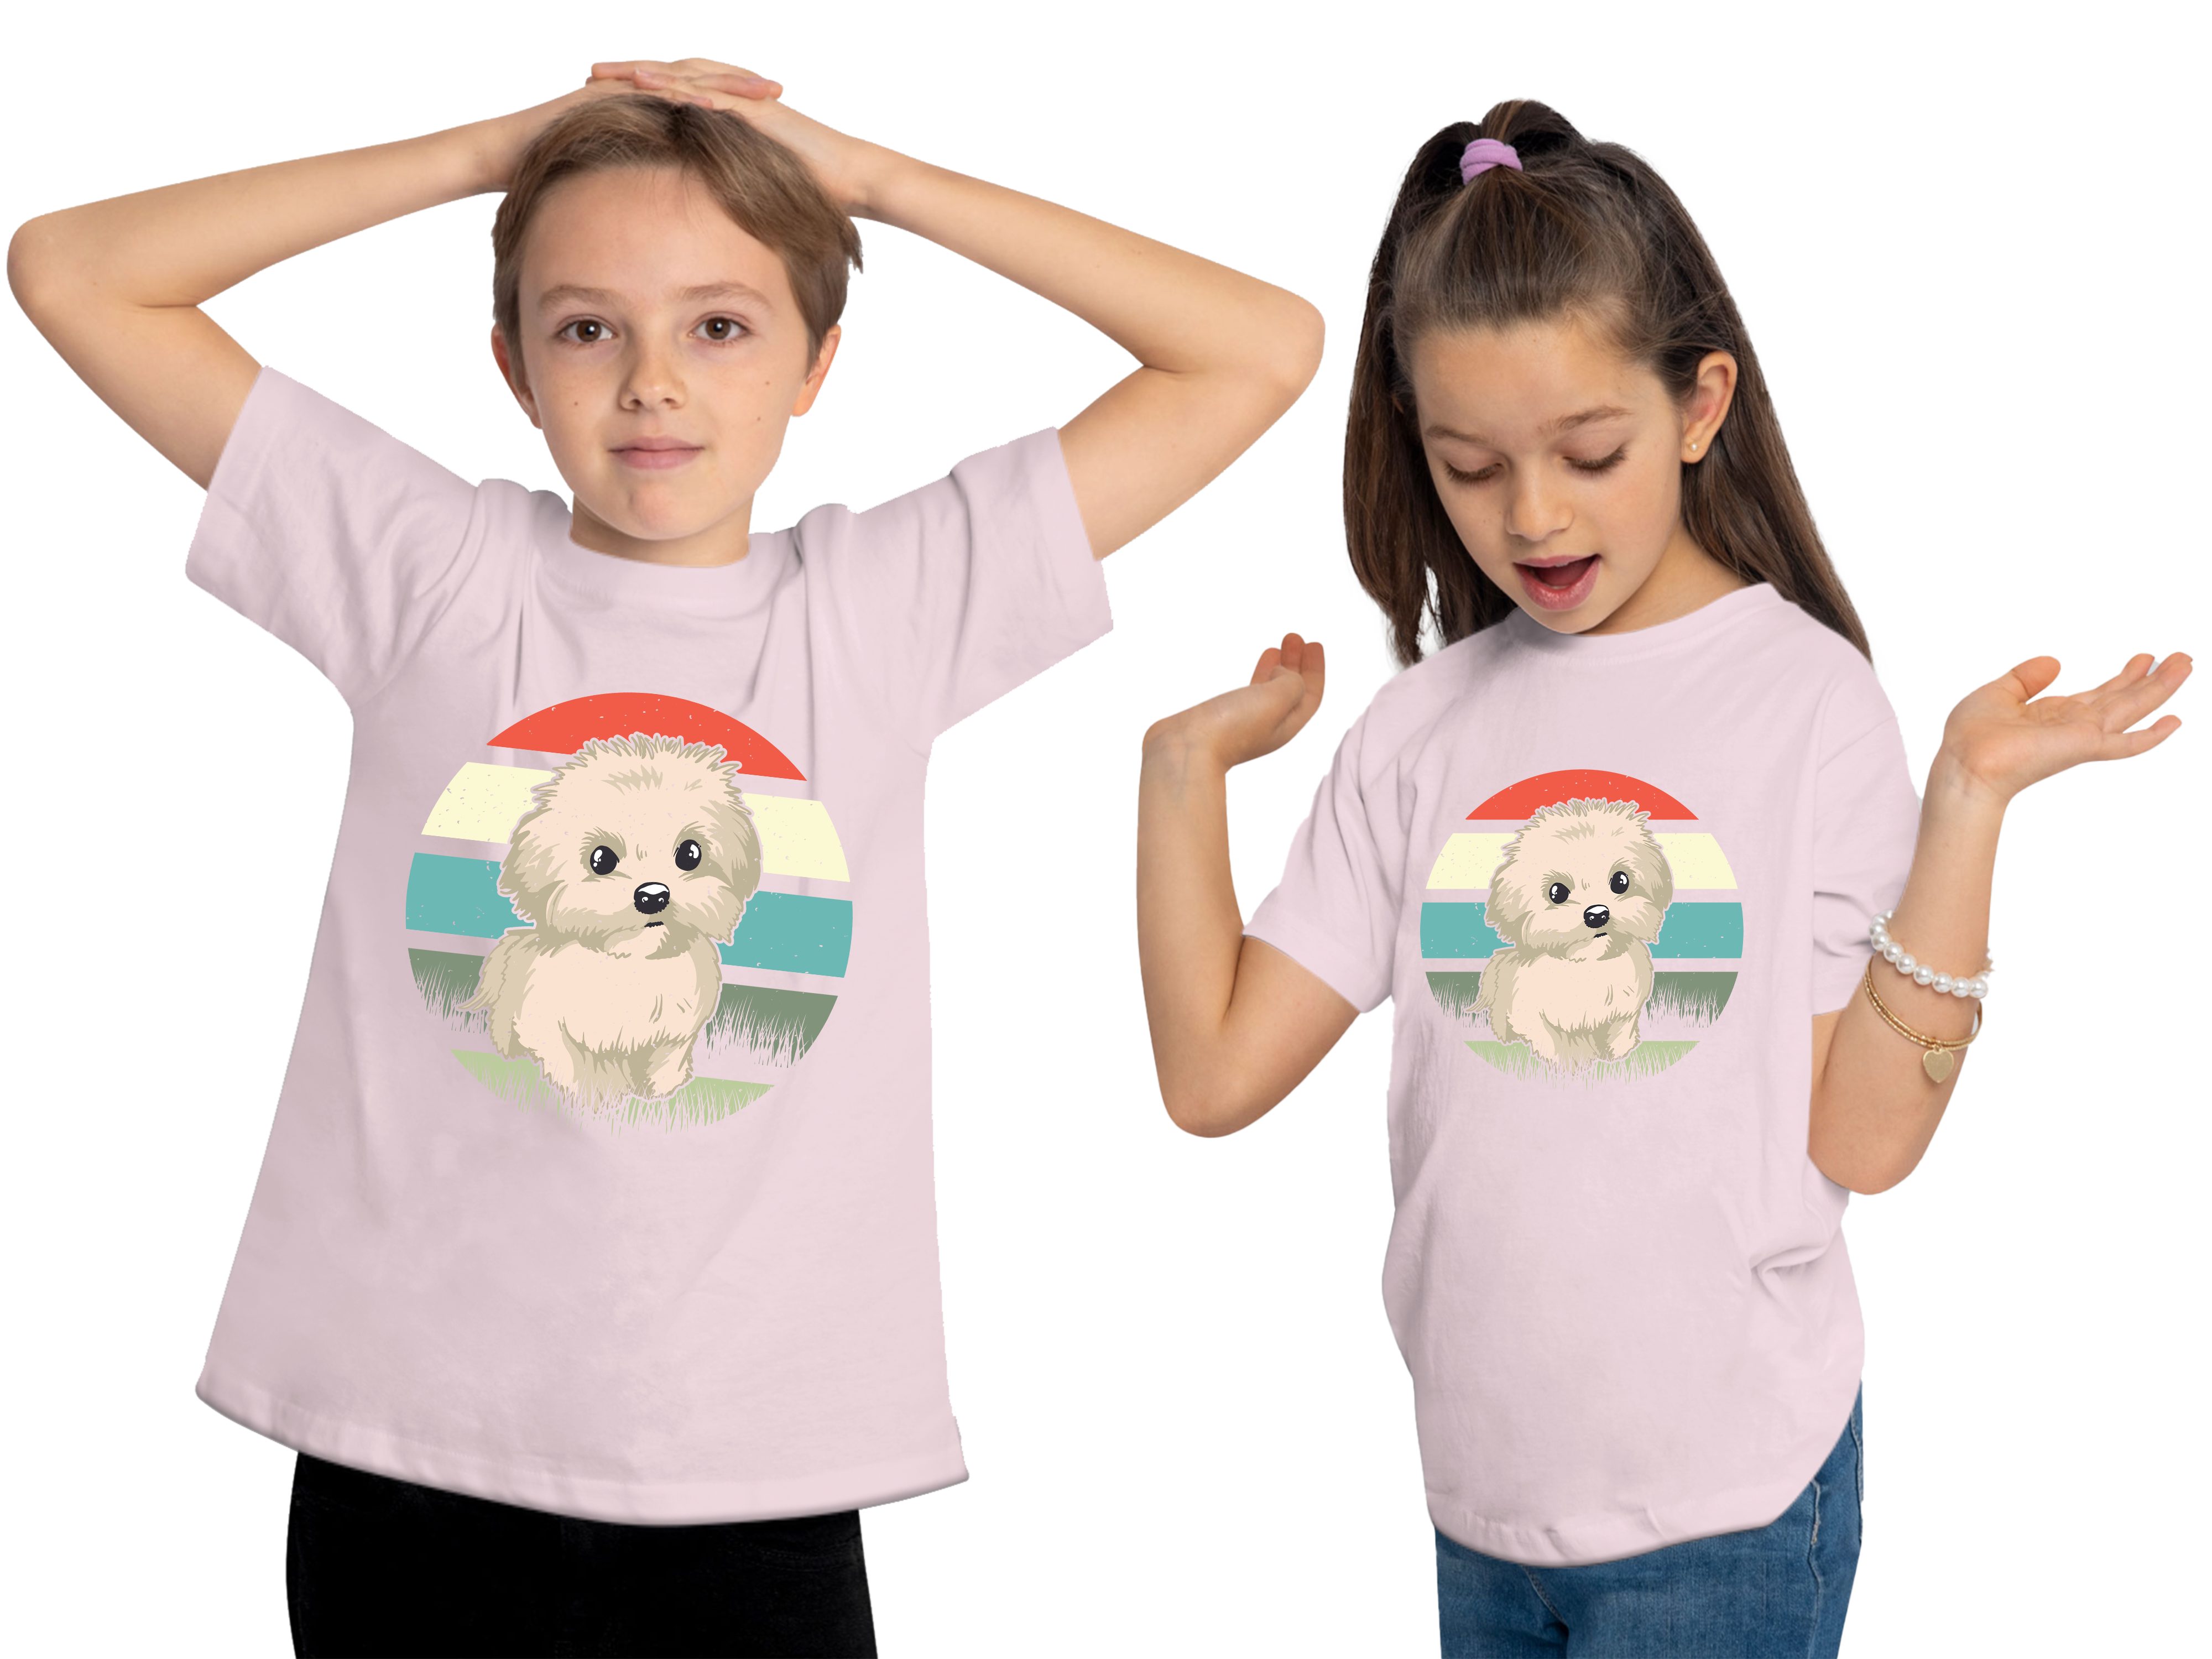 MyDesign24 Print-Shirt Kinder i242 T-Shirt - rosa Retro Aufdruck, Baumwollshirt Welpen bedruckt mit Hunde Malteser